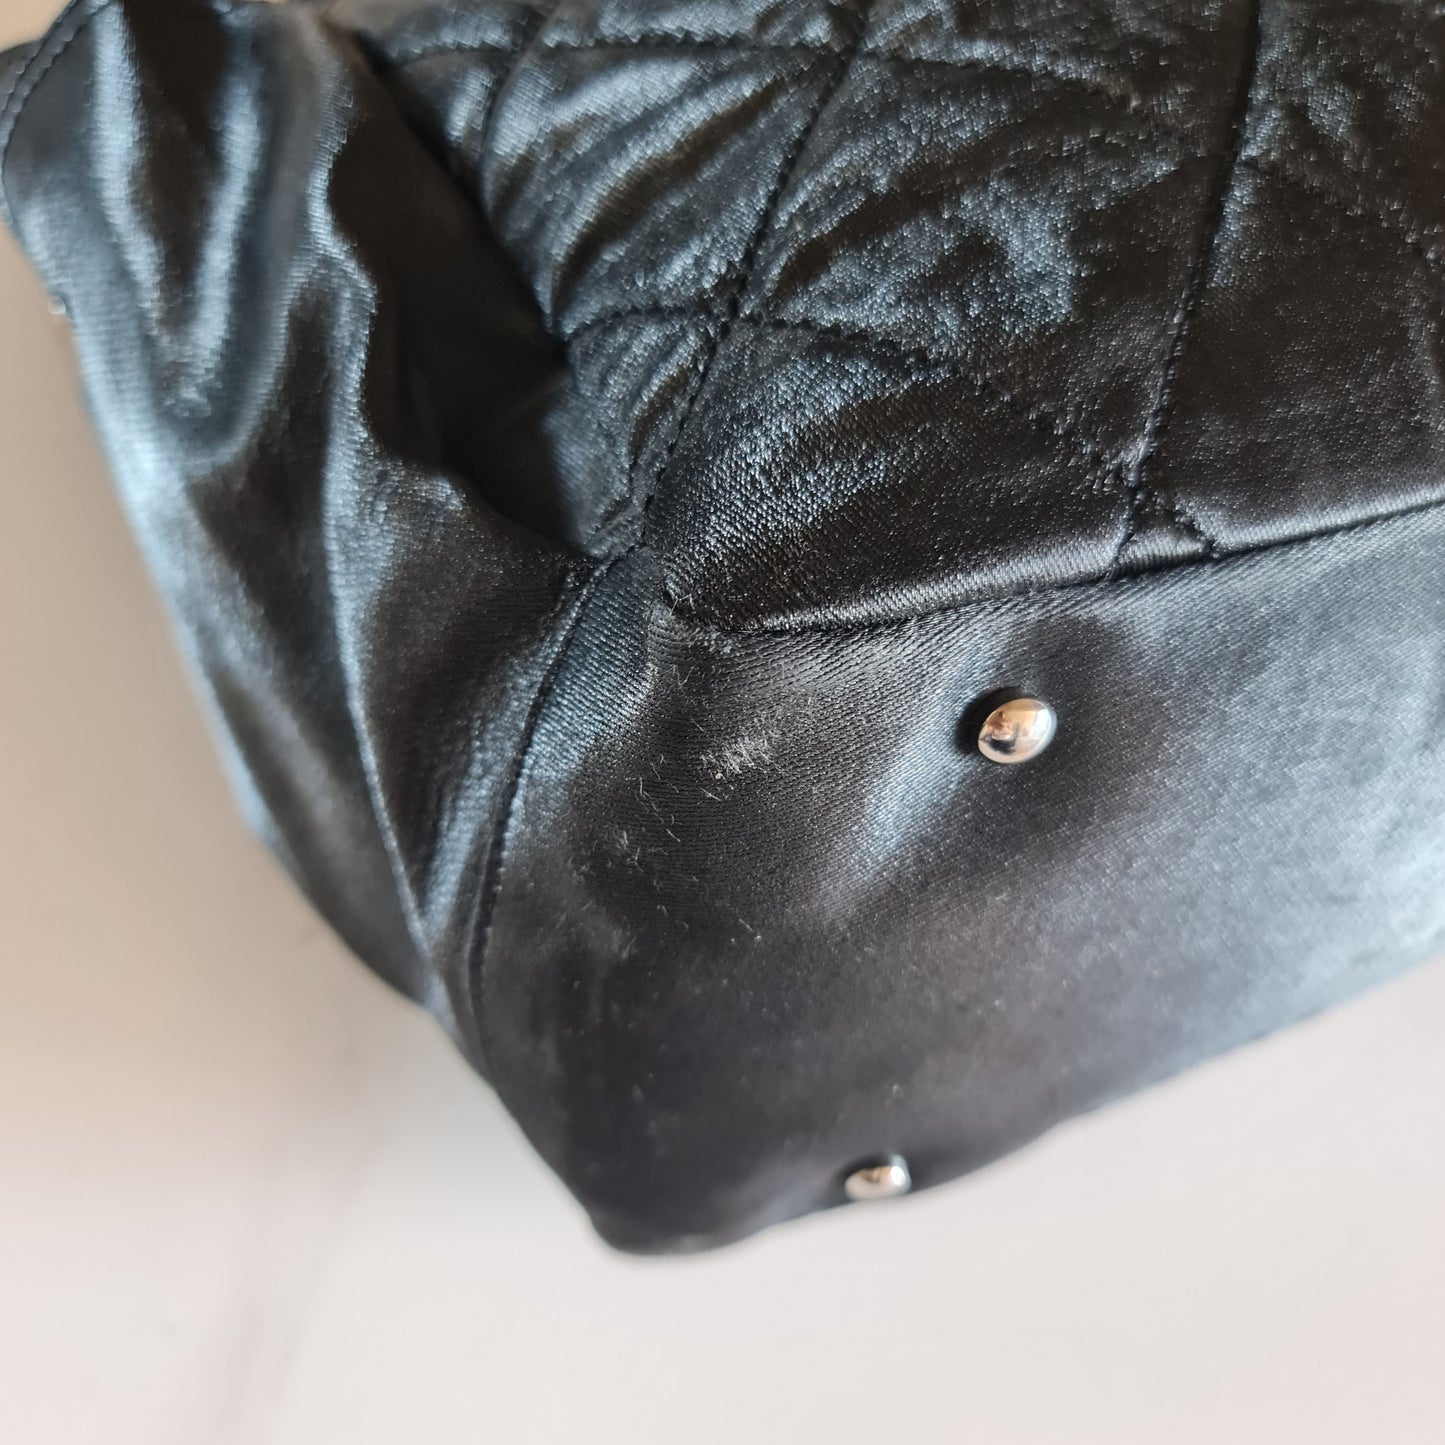 Chanel Black Patent Leather Biarritz Tote Sac